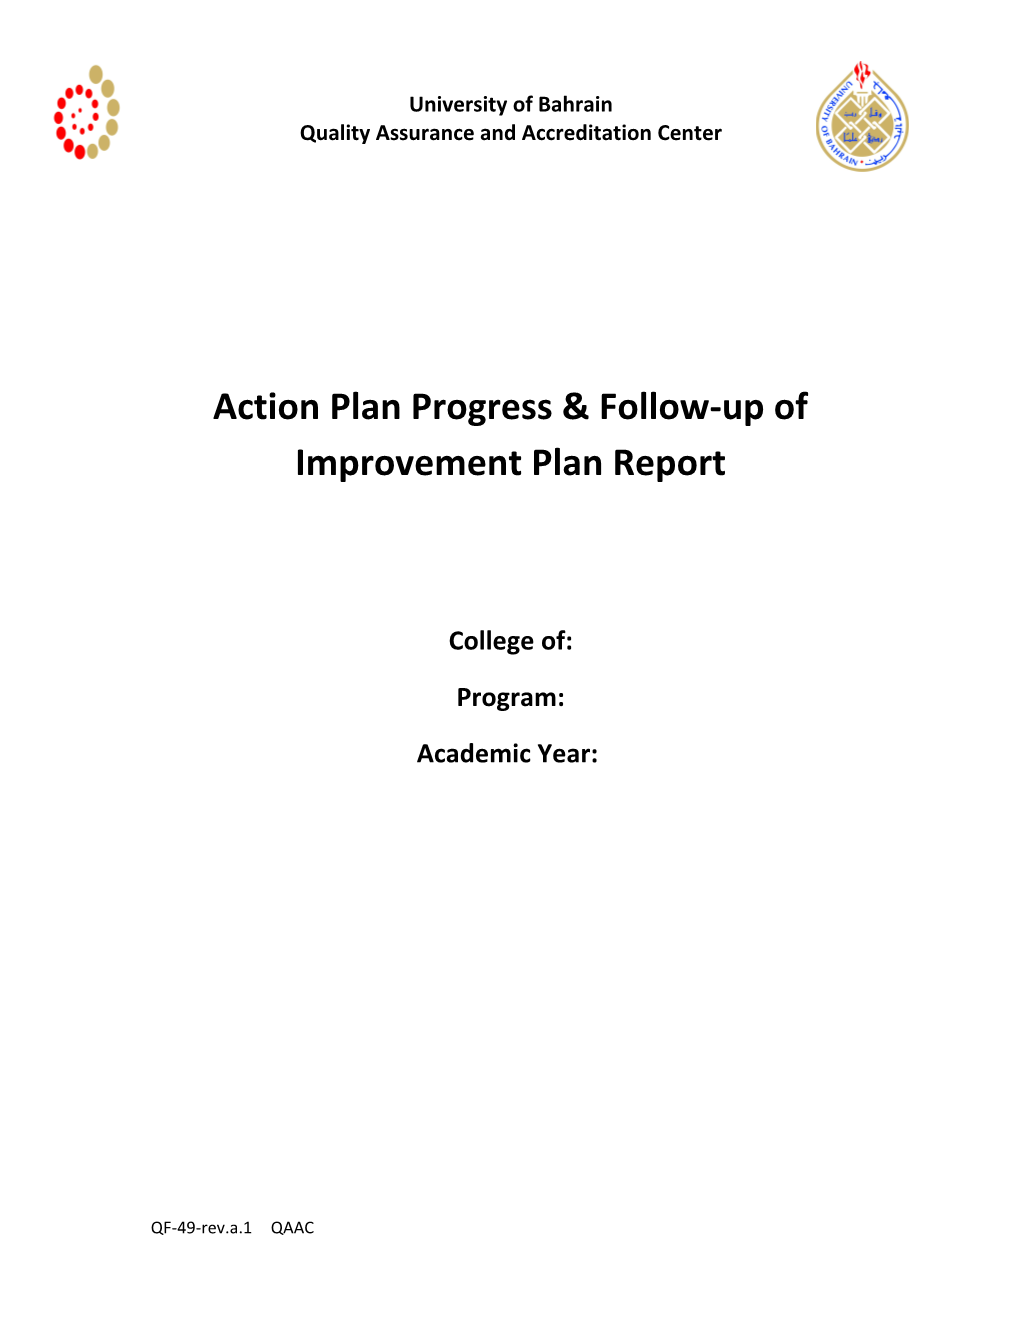 Action Plan Progress & Follow-Up of Improvement Plan Report